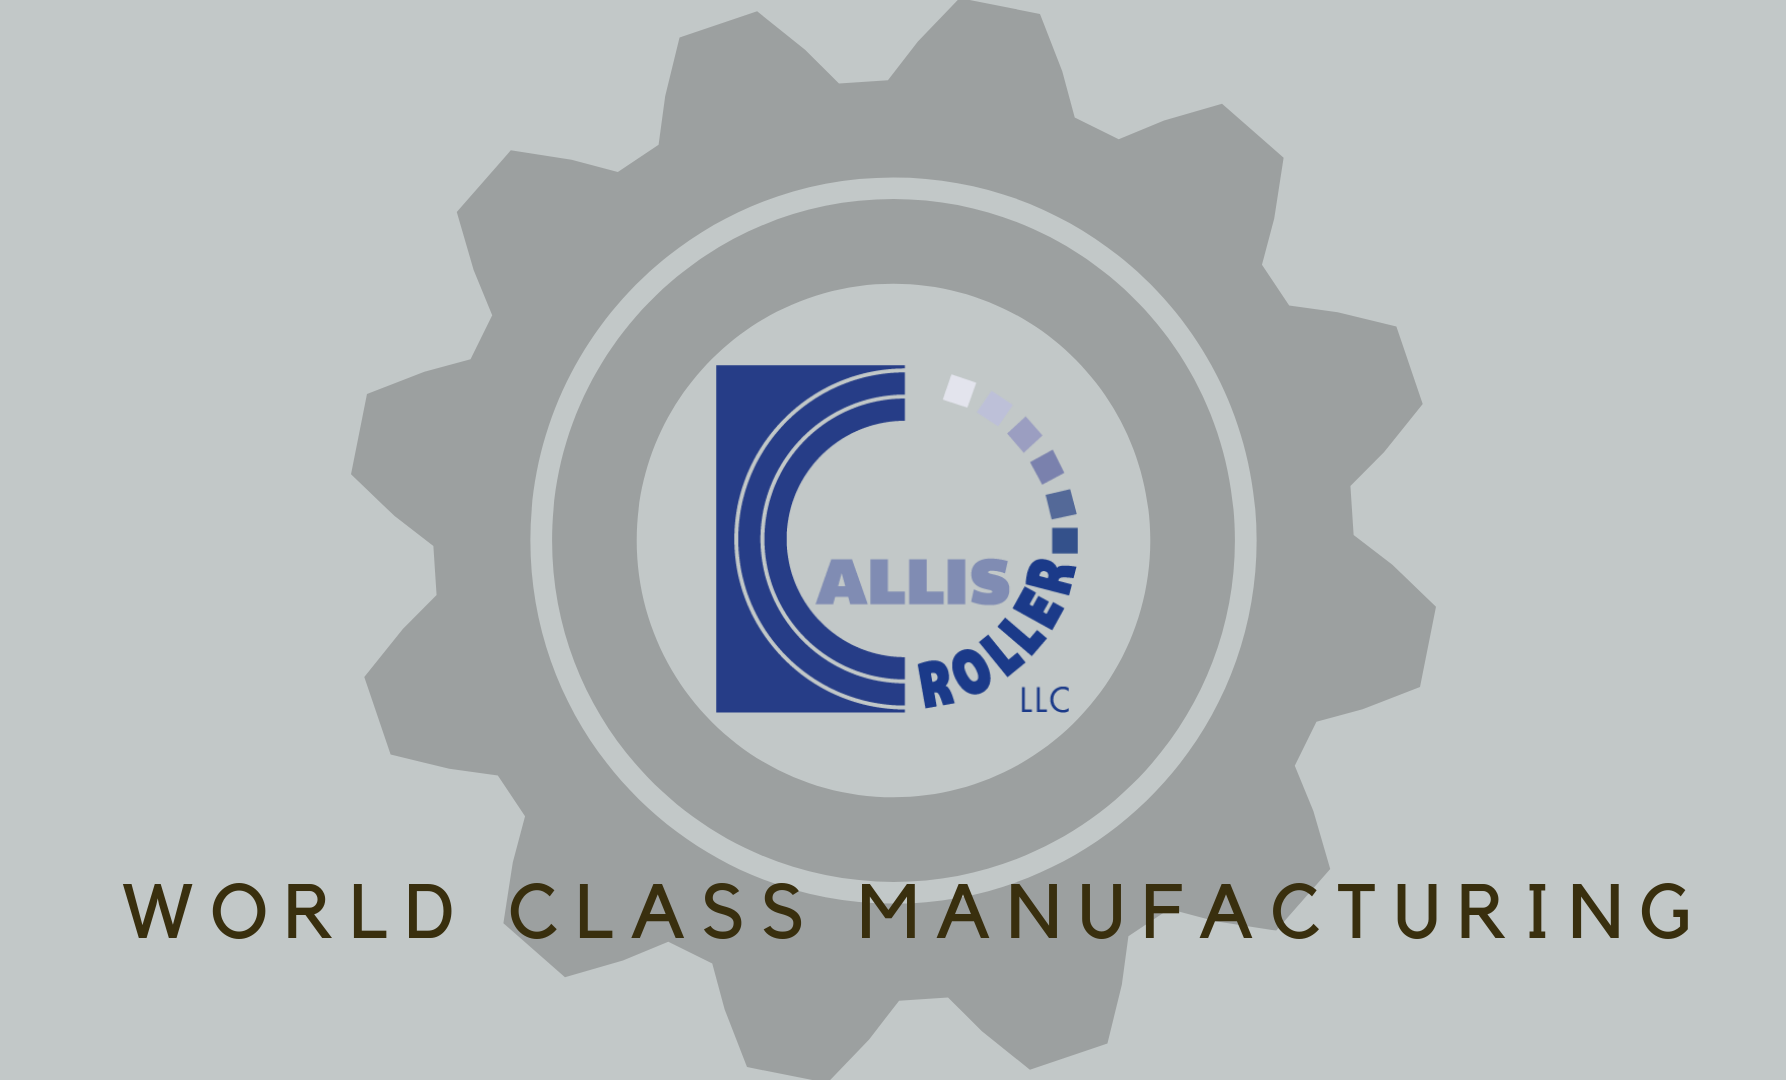 Wisconsin Manufacturer, Allis Roller, Joins Exclusive World Class Manufacturing Program